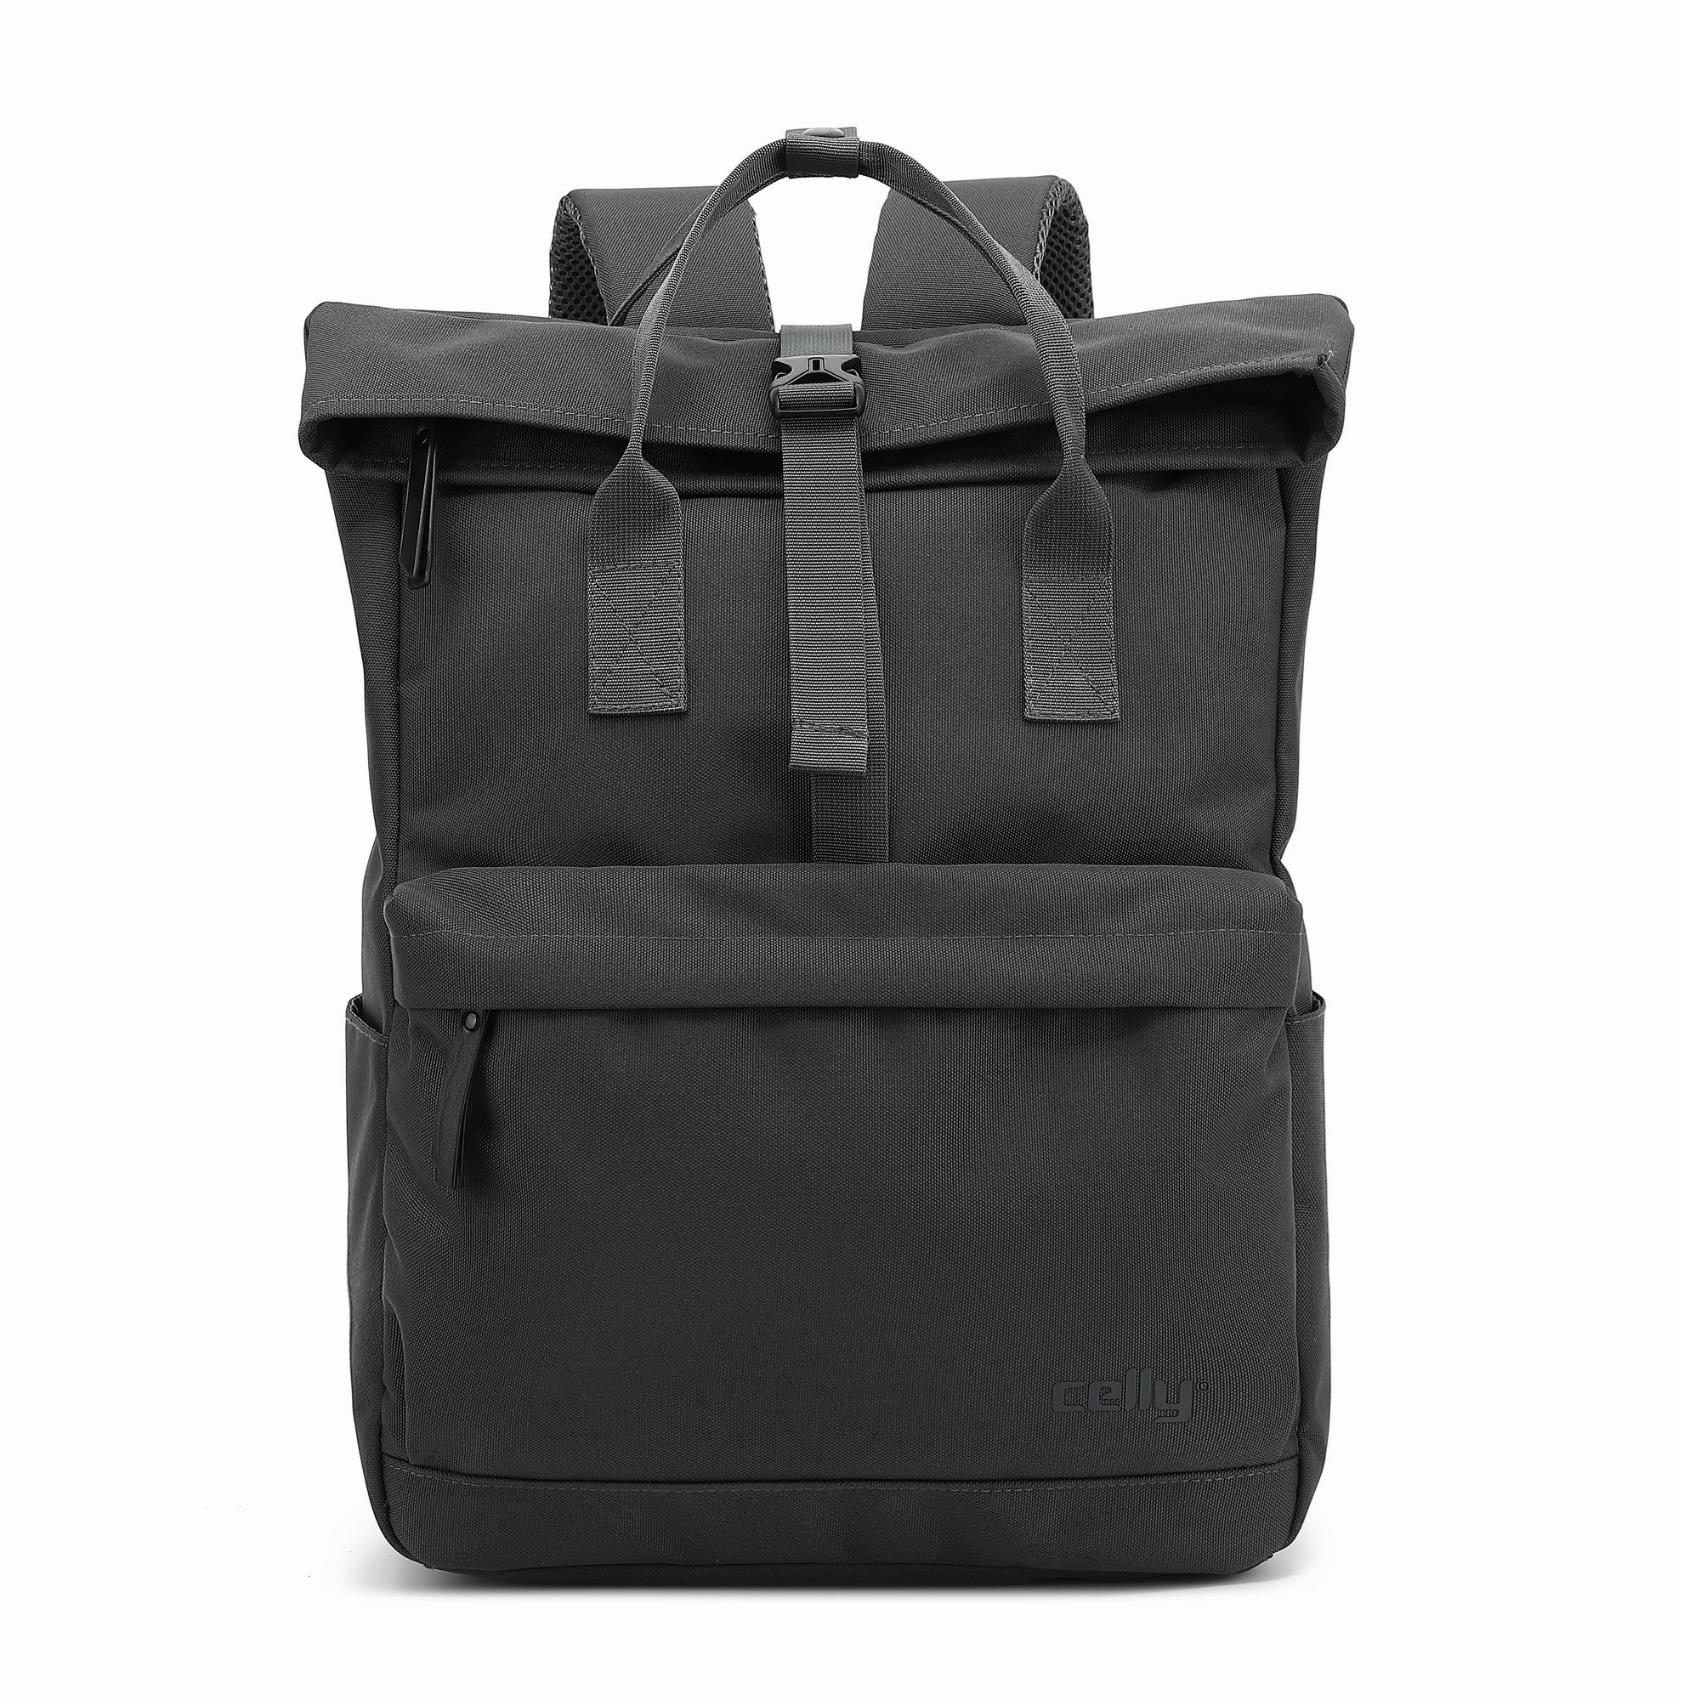 Backpack For Trips Grey Celly Venturepackgr 8021735198192